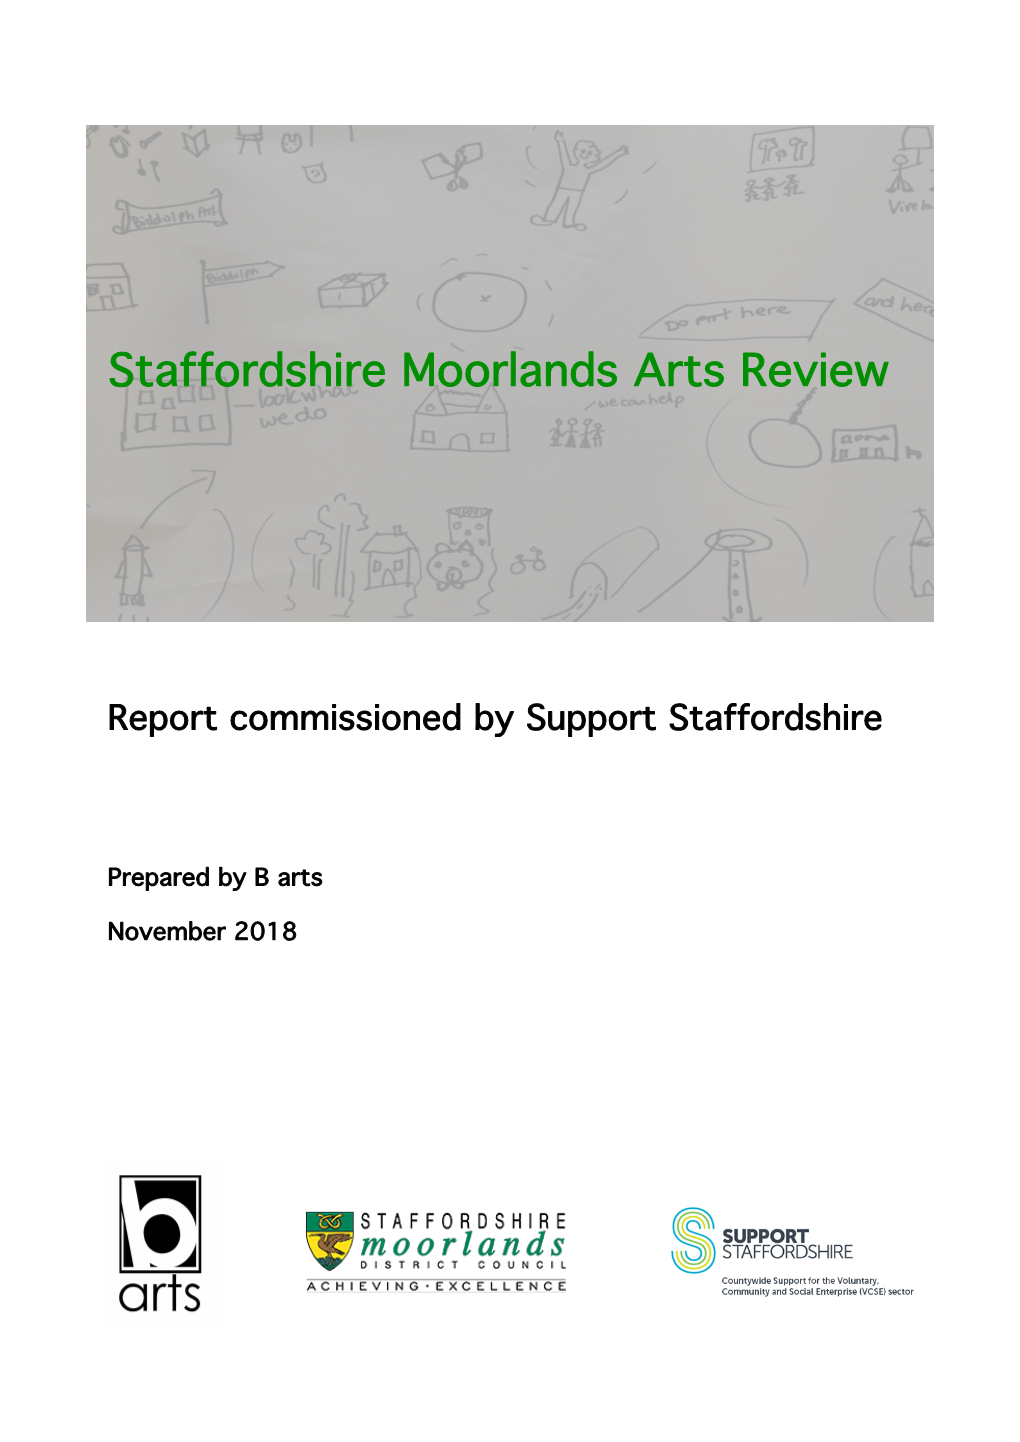 Staffordshire Moorlands Arts Review.22 Nov 18